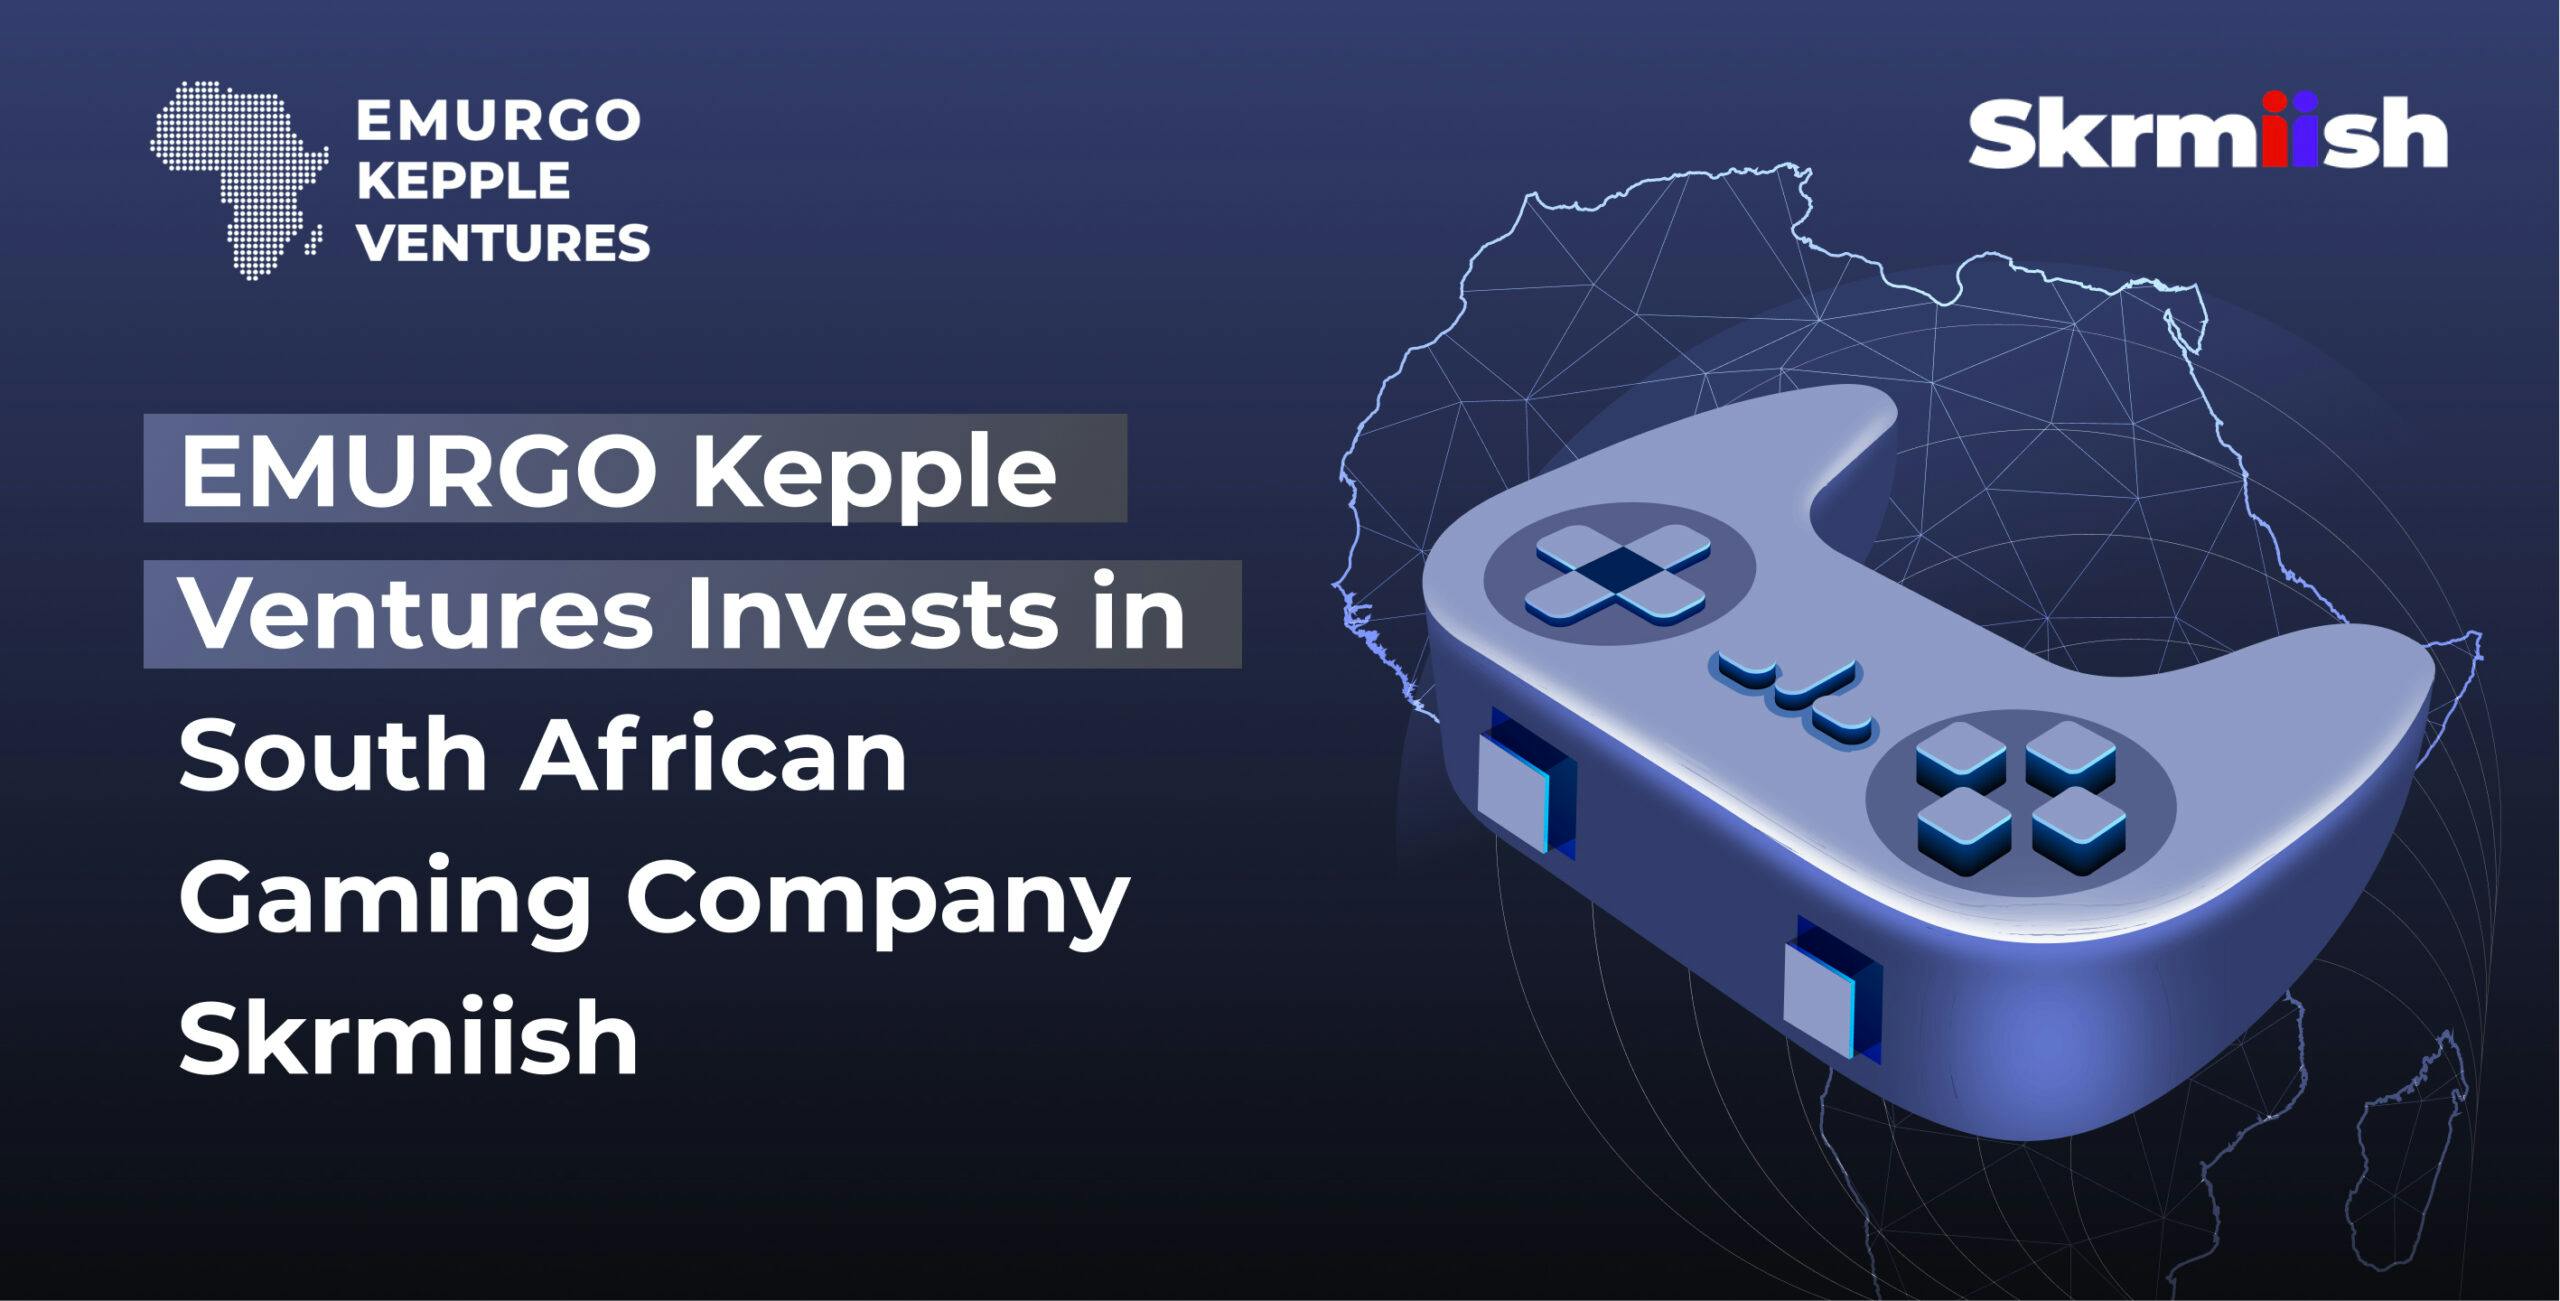 EMURGO-Kepple-Ventures-Invests-in-Skrmiish-scaled-1.jpg